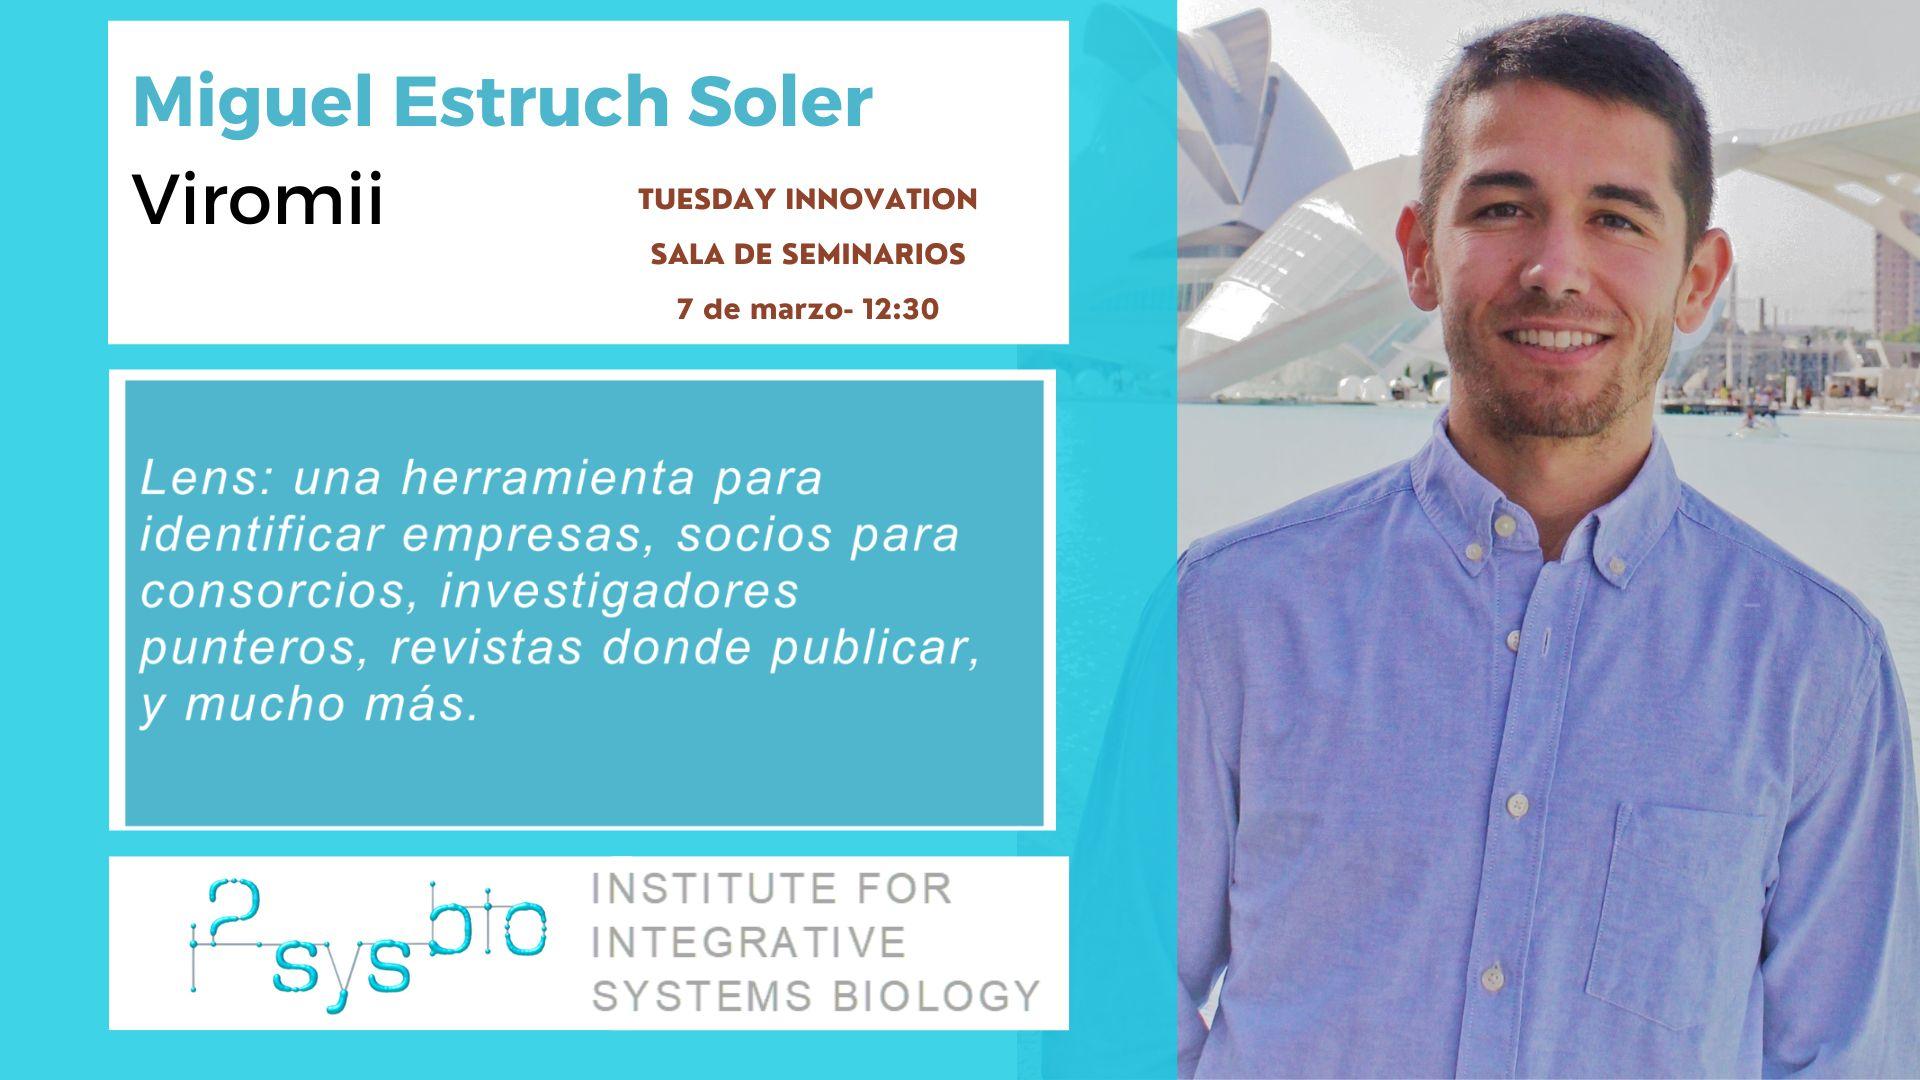  I2SysBio - Innovation Tuesday | Charla de Miguel Estruch Soler